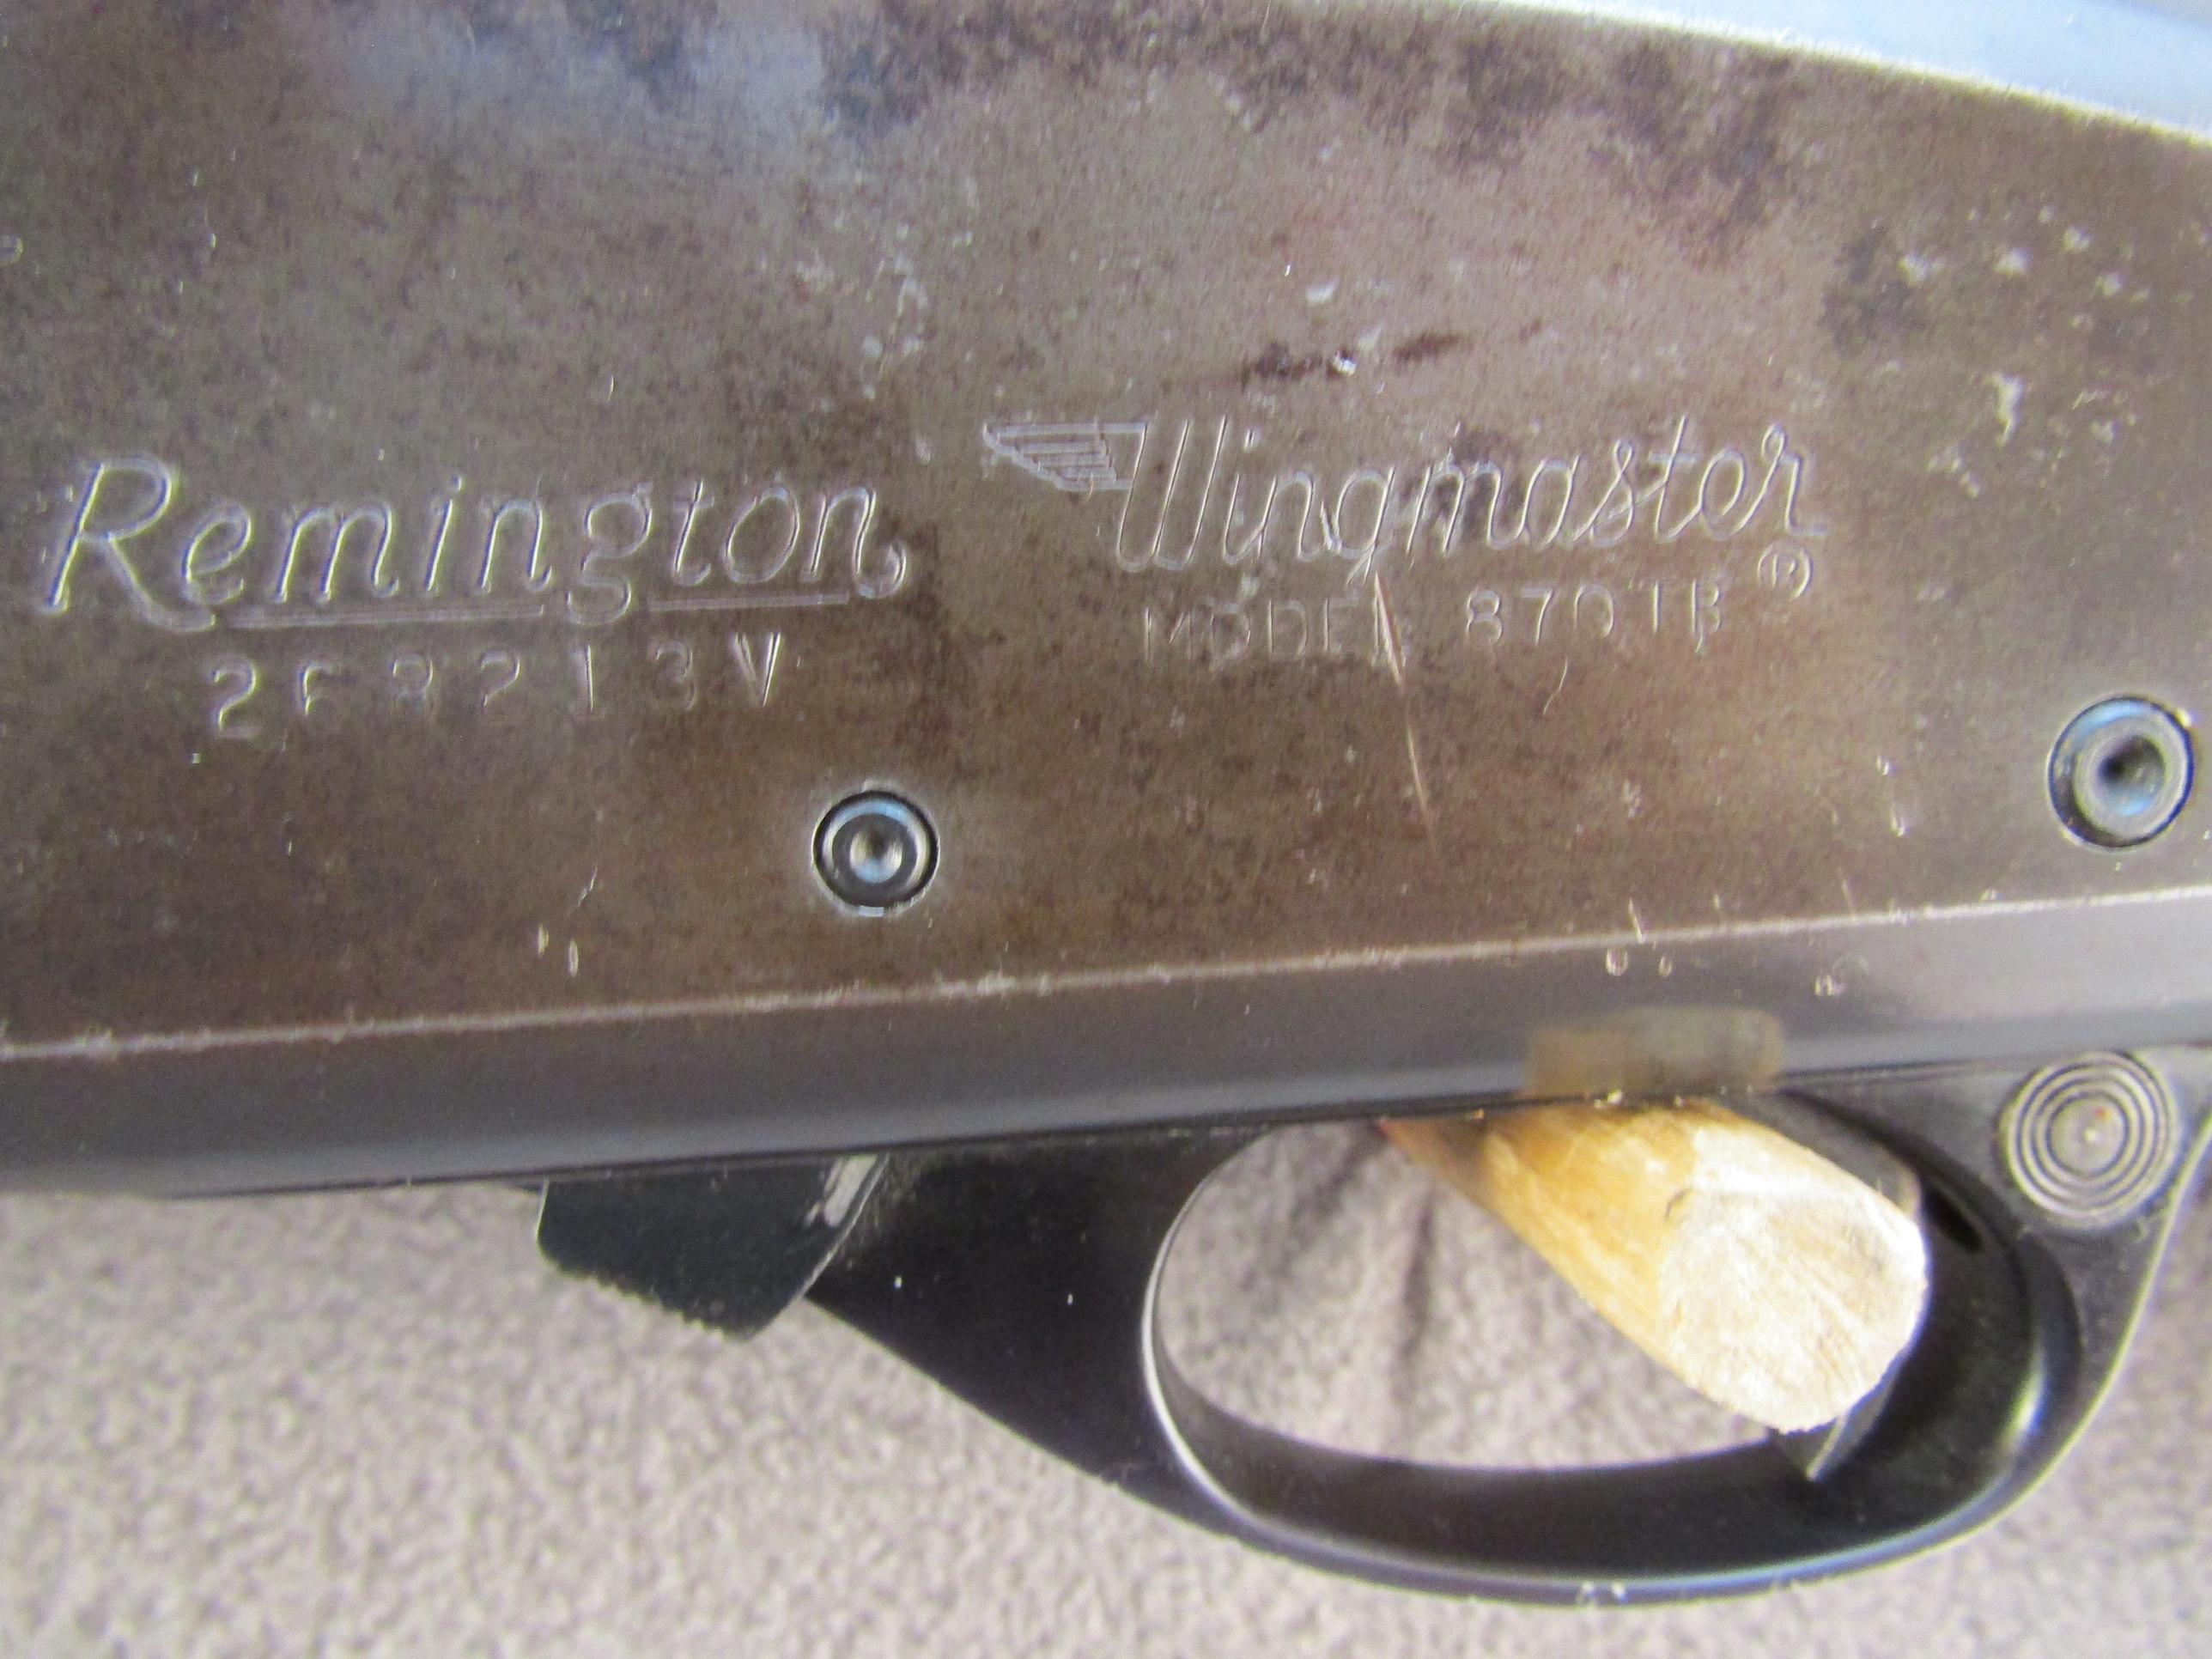 REMINGTON Model Wingmaster 870TB, Pump-Action Shotgun, 12g, S#268213V